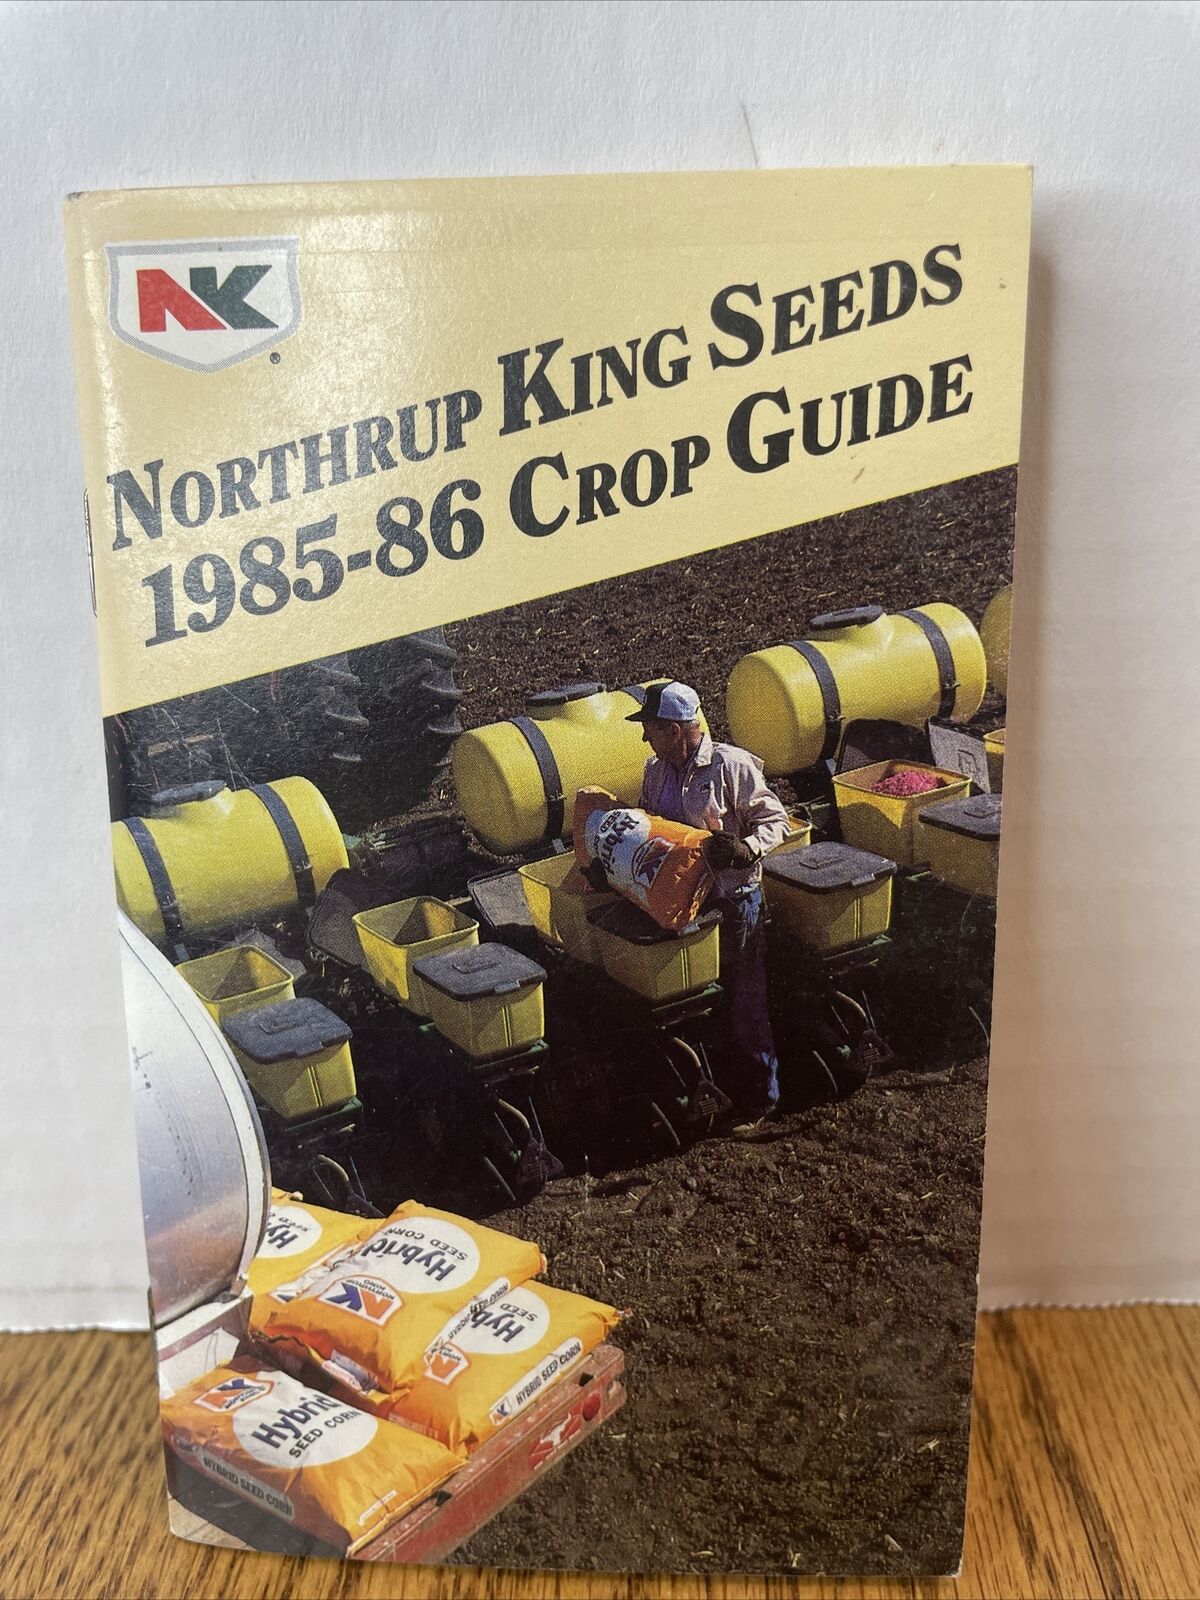 Vintage 1985-86 Northrup King Seeds Corn Crop Guide NK Advertising Book